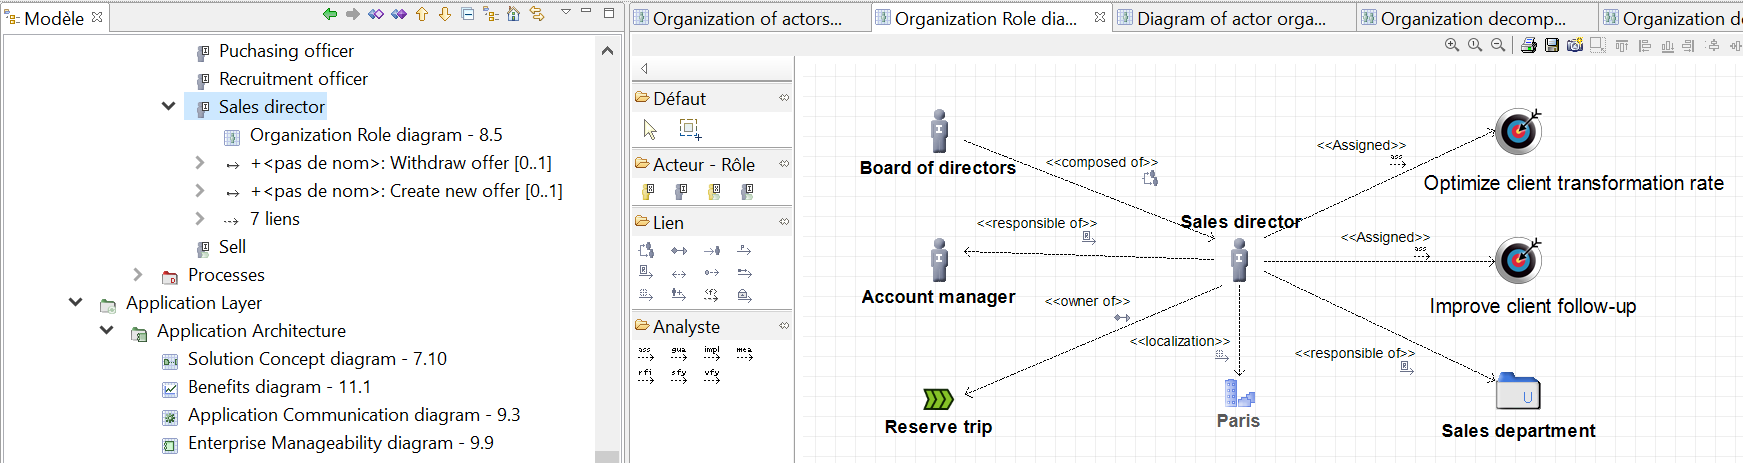 etude-de-cas-complete-togaf-diagramme-organisation-focalise-acteur-sales-director-2.PNG